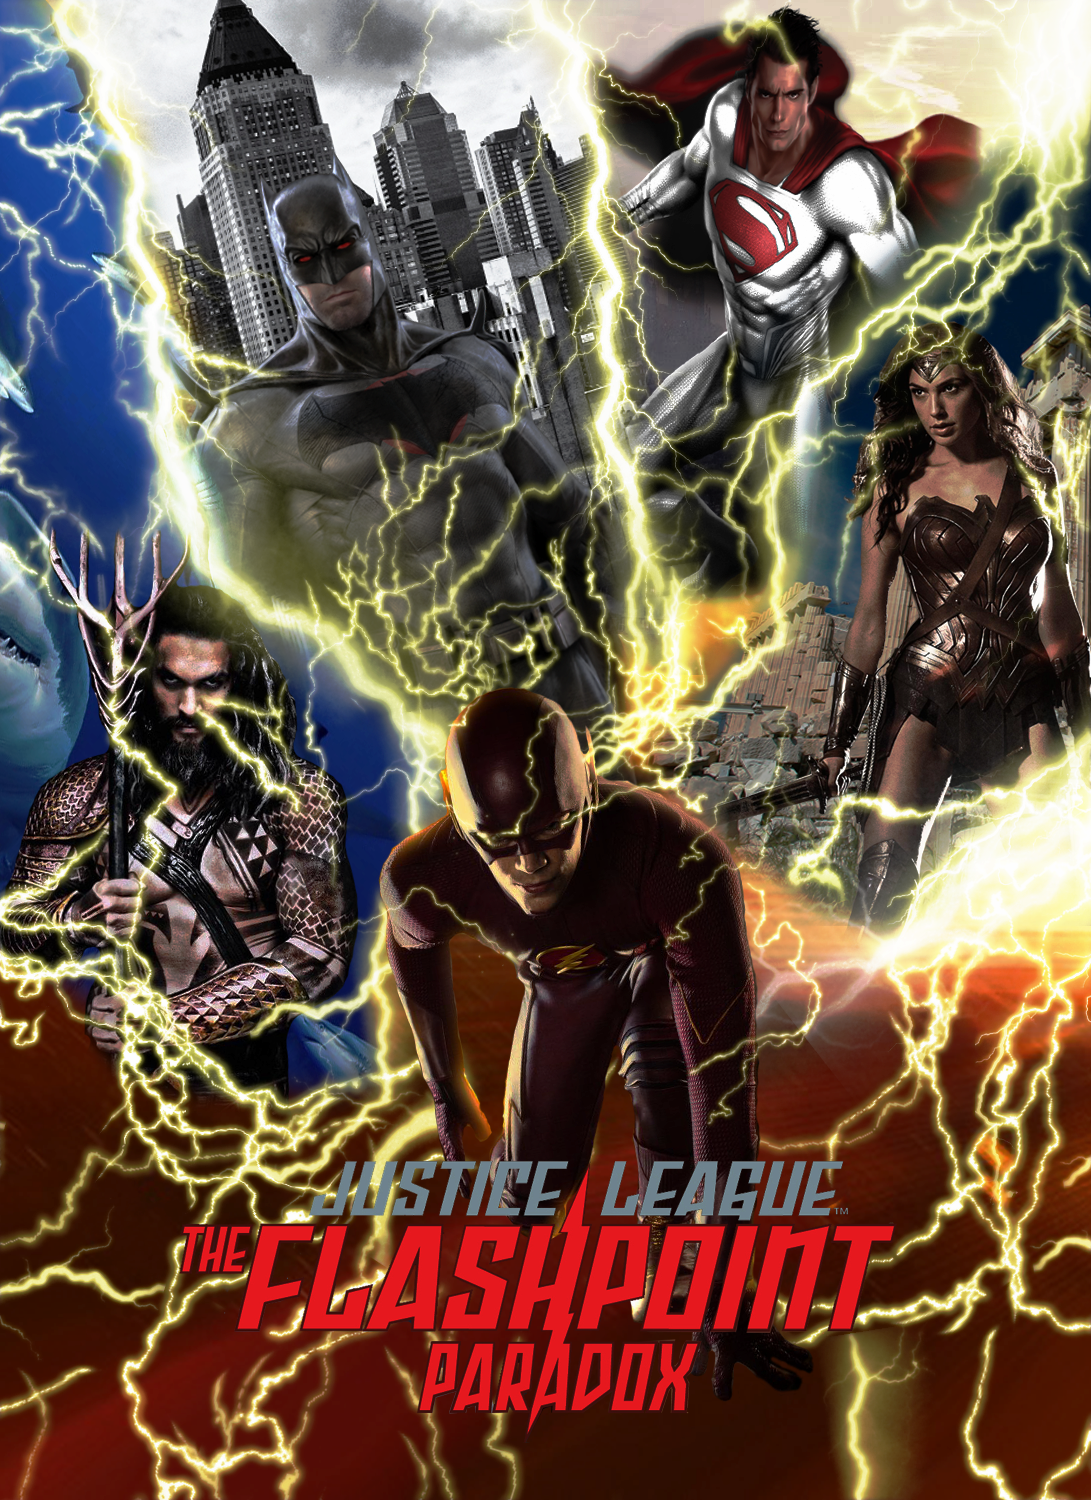 Justice League: The Flashpoint Paradox Backgrounds, Compatible - PC, Mobile, Gadgets| 1091x1500 px